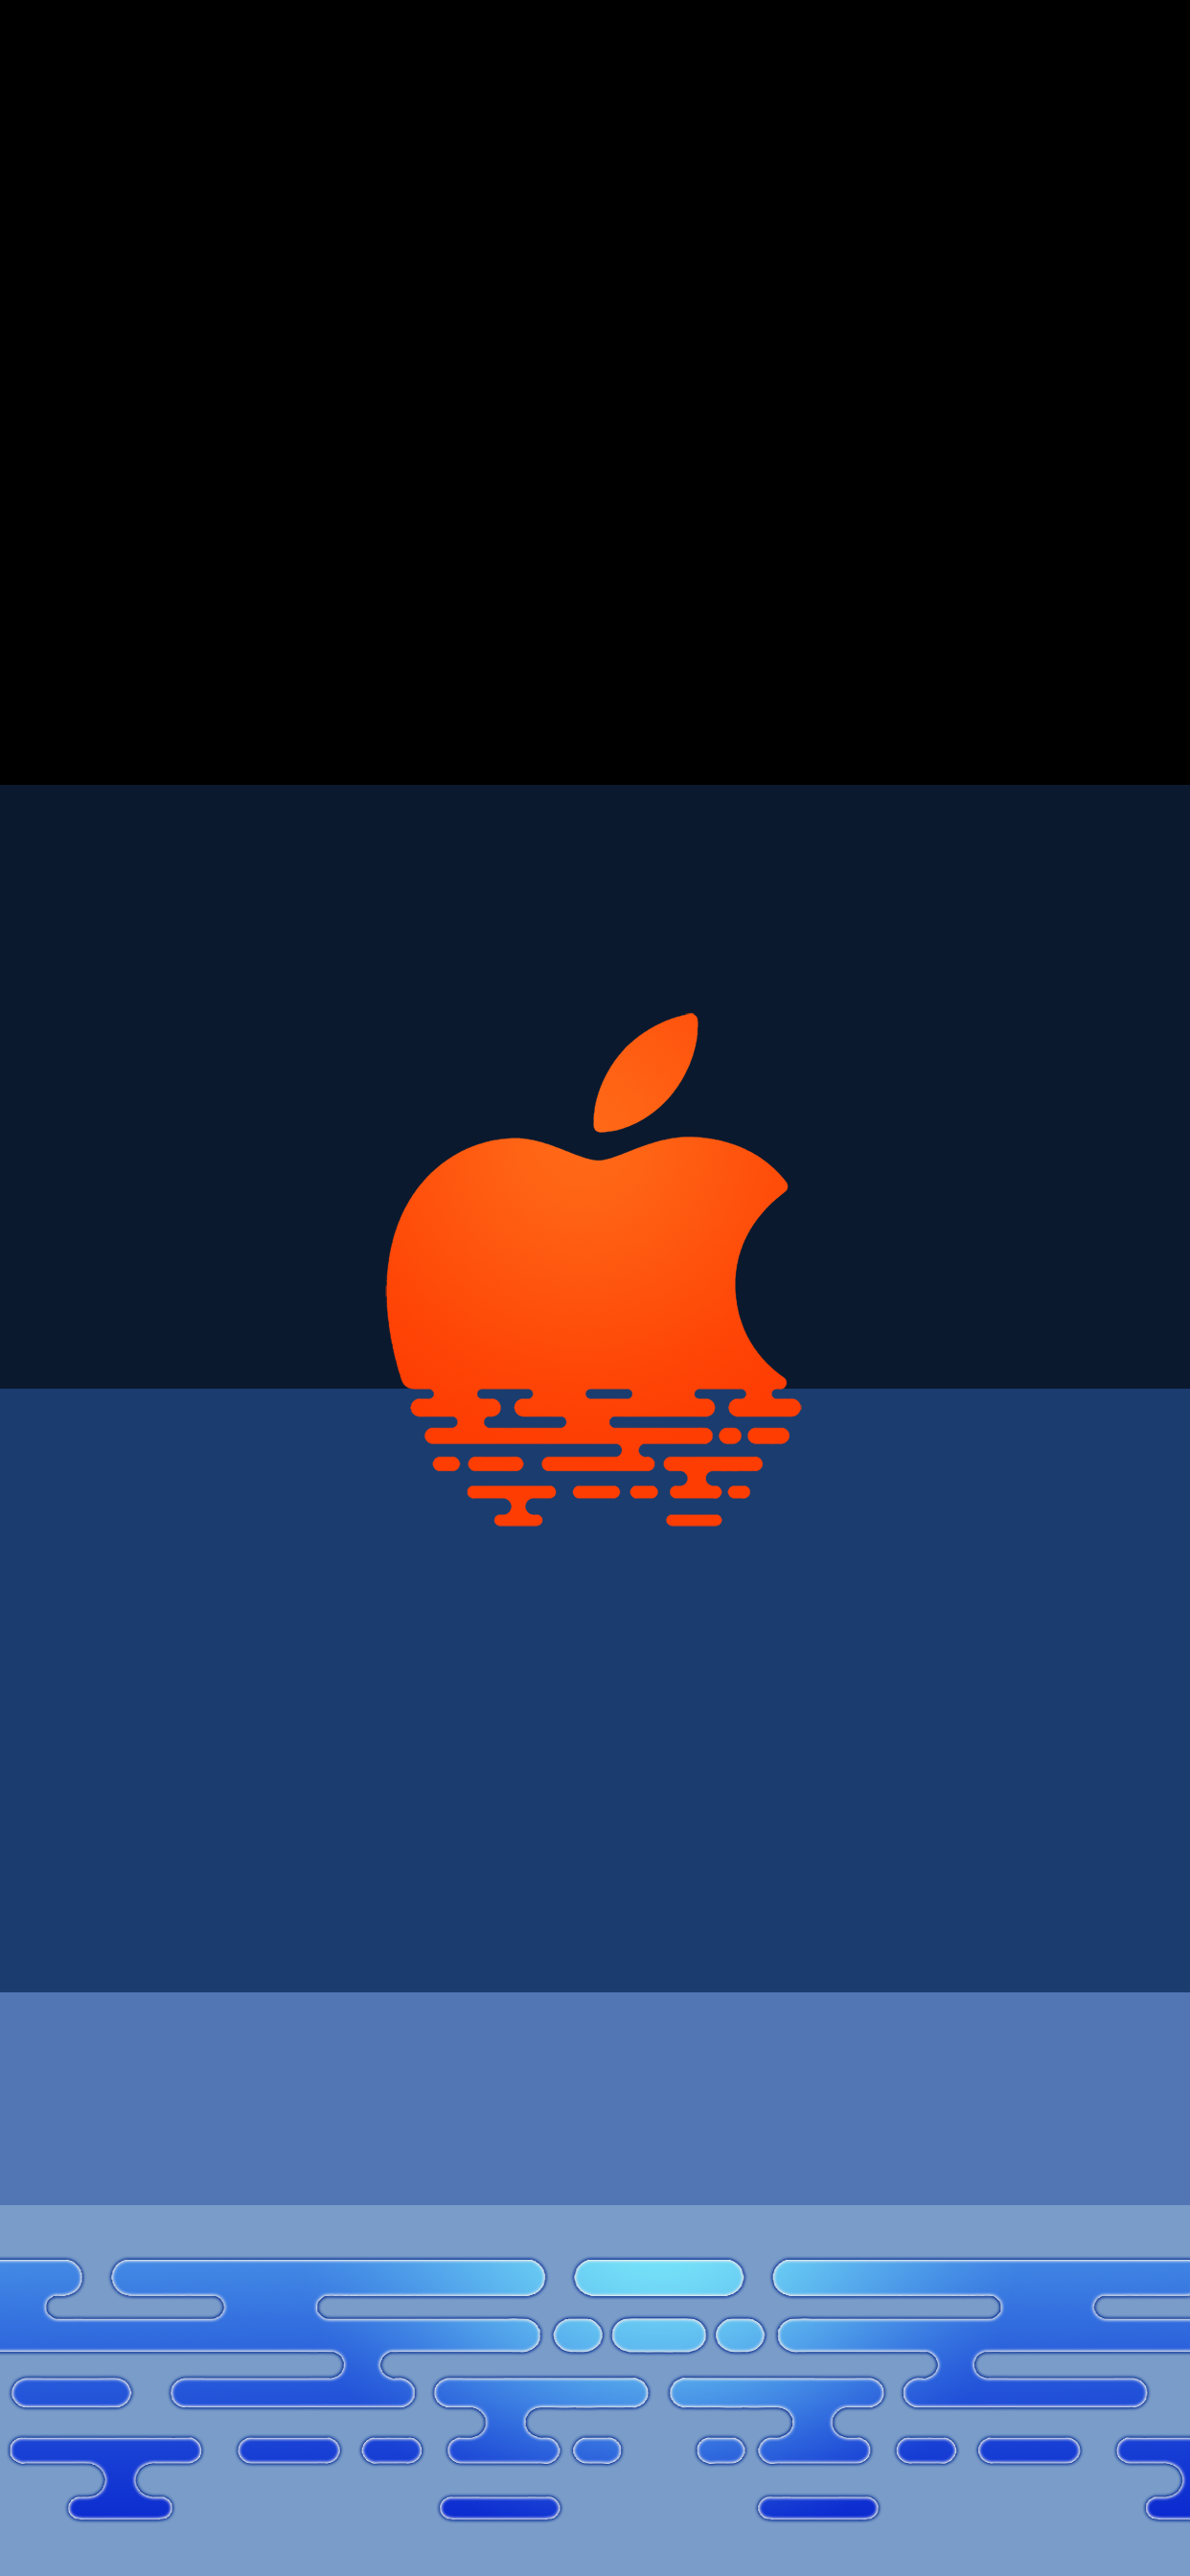 Apple_Marina_Bay_Sands_Wallpaper-iPhone AR72014 idownloadblog Black logo